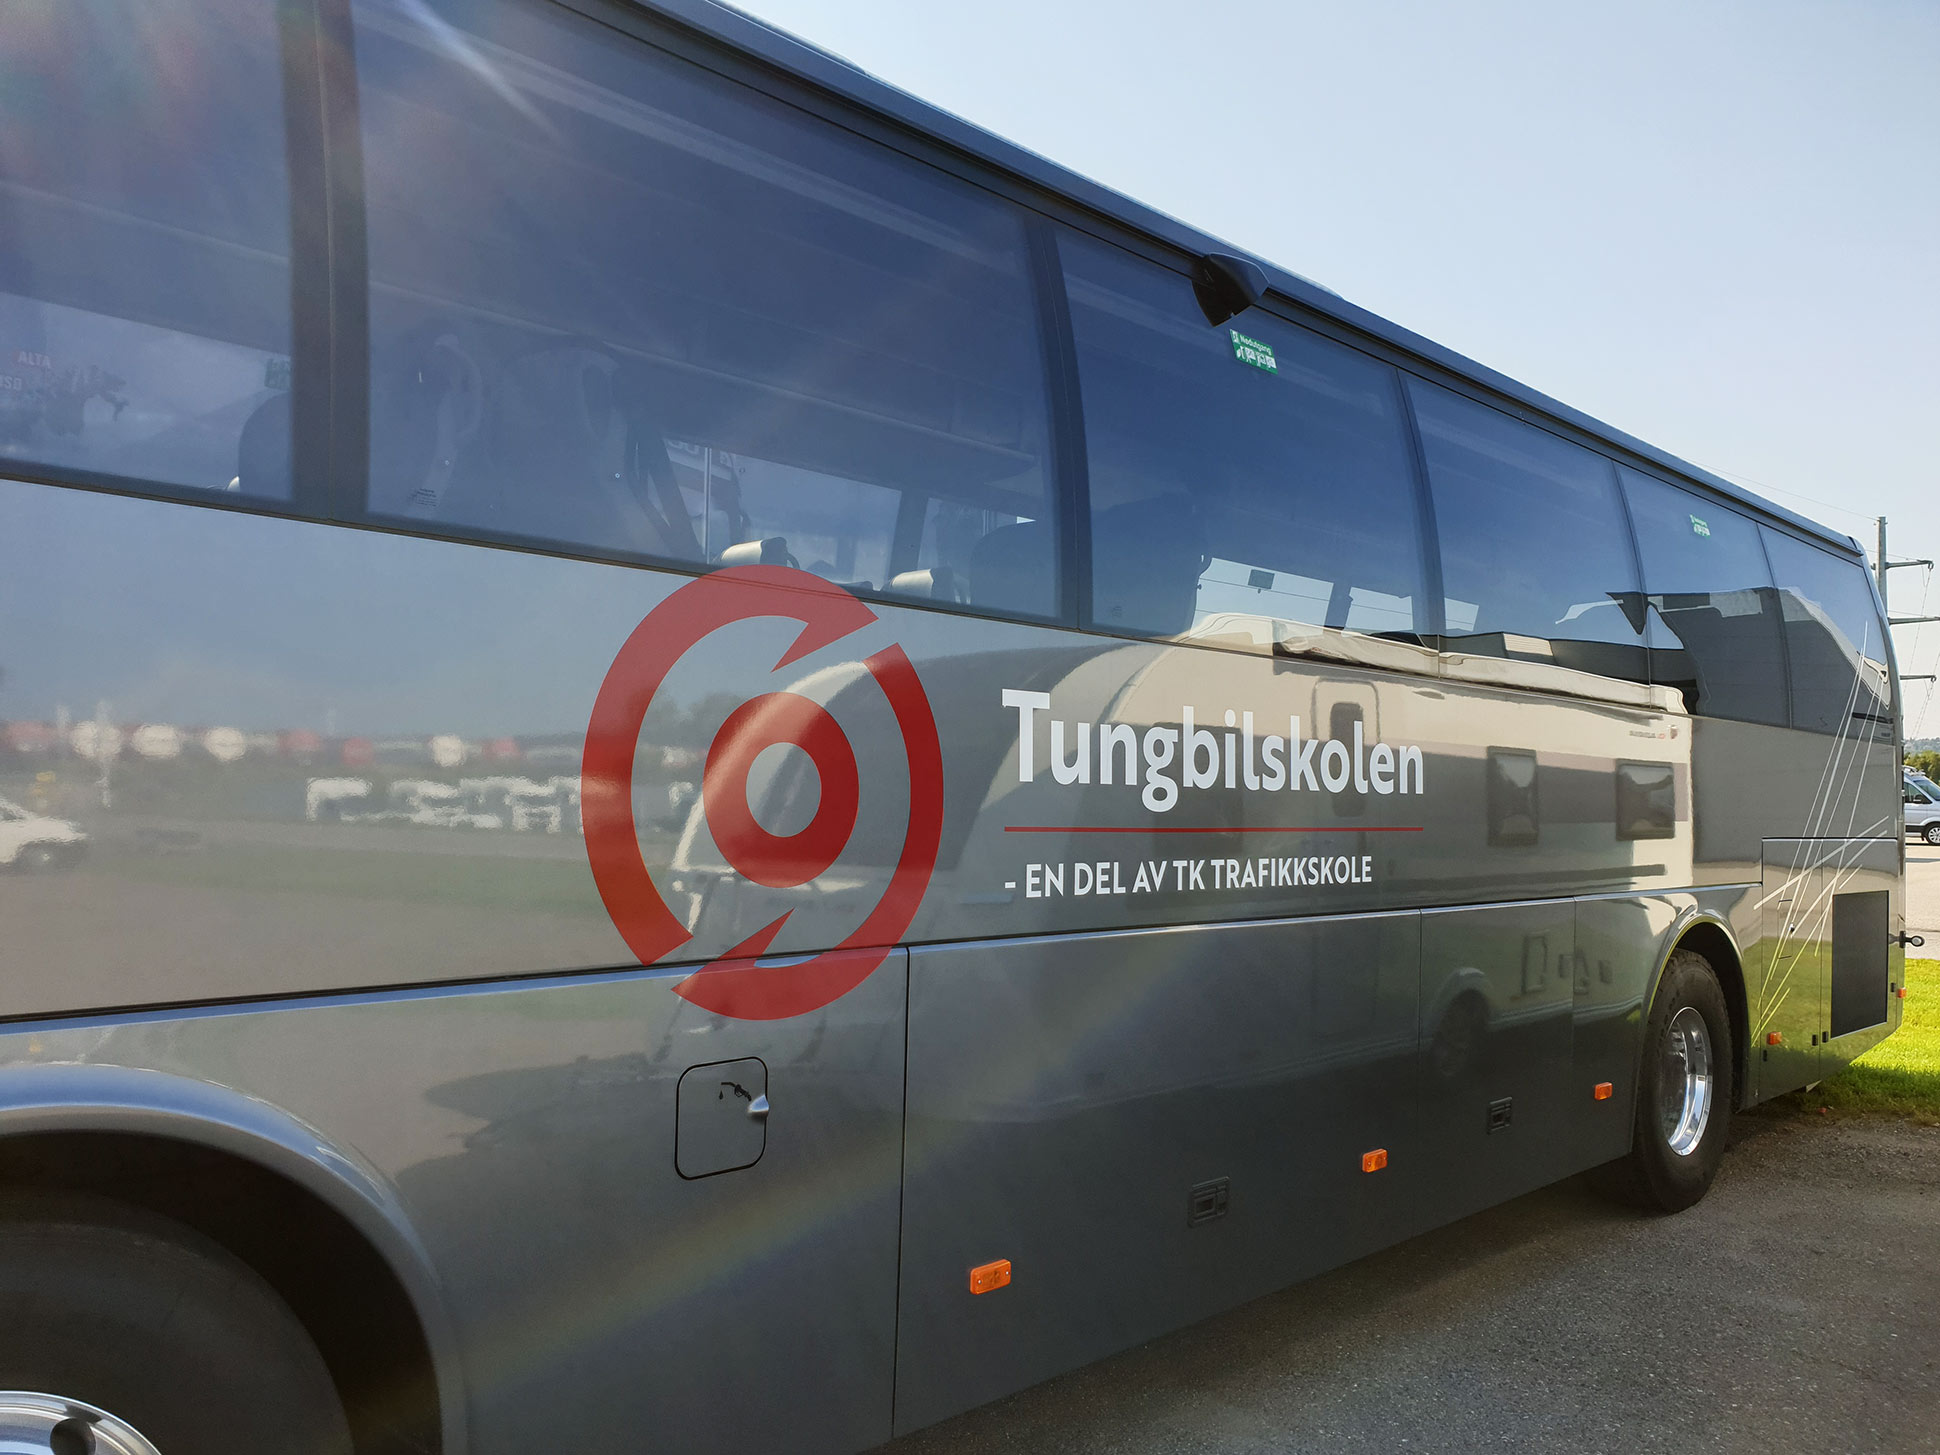 Bussdekor på grå buss for Tungbilskolen